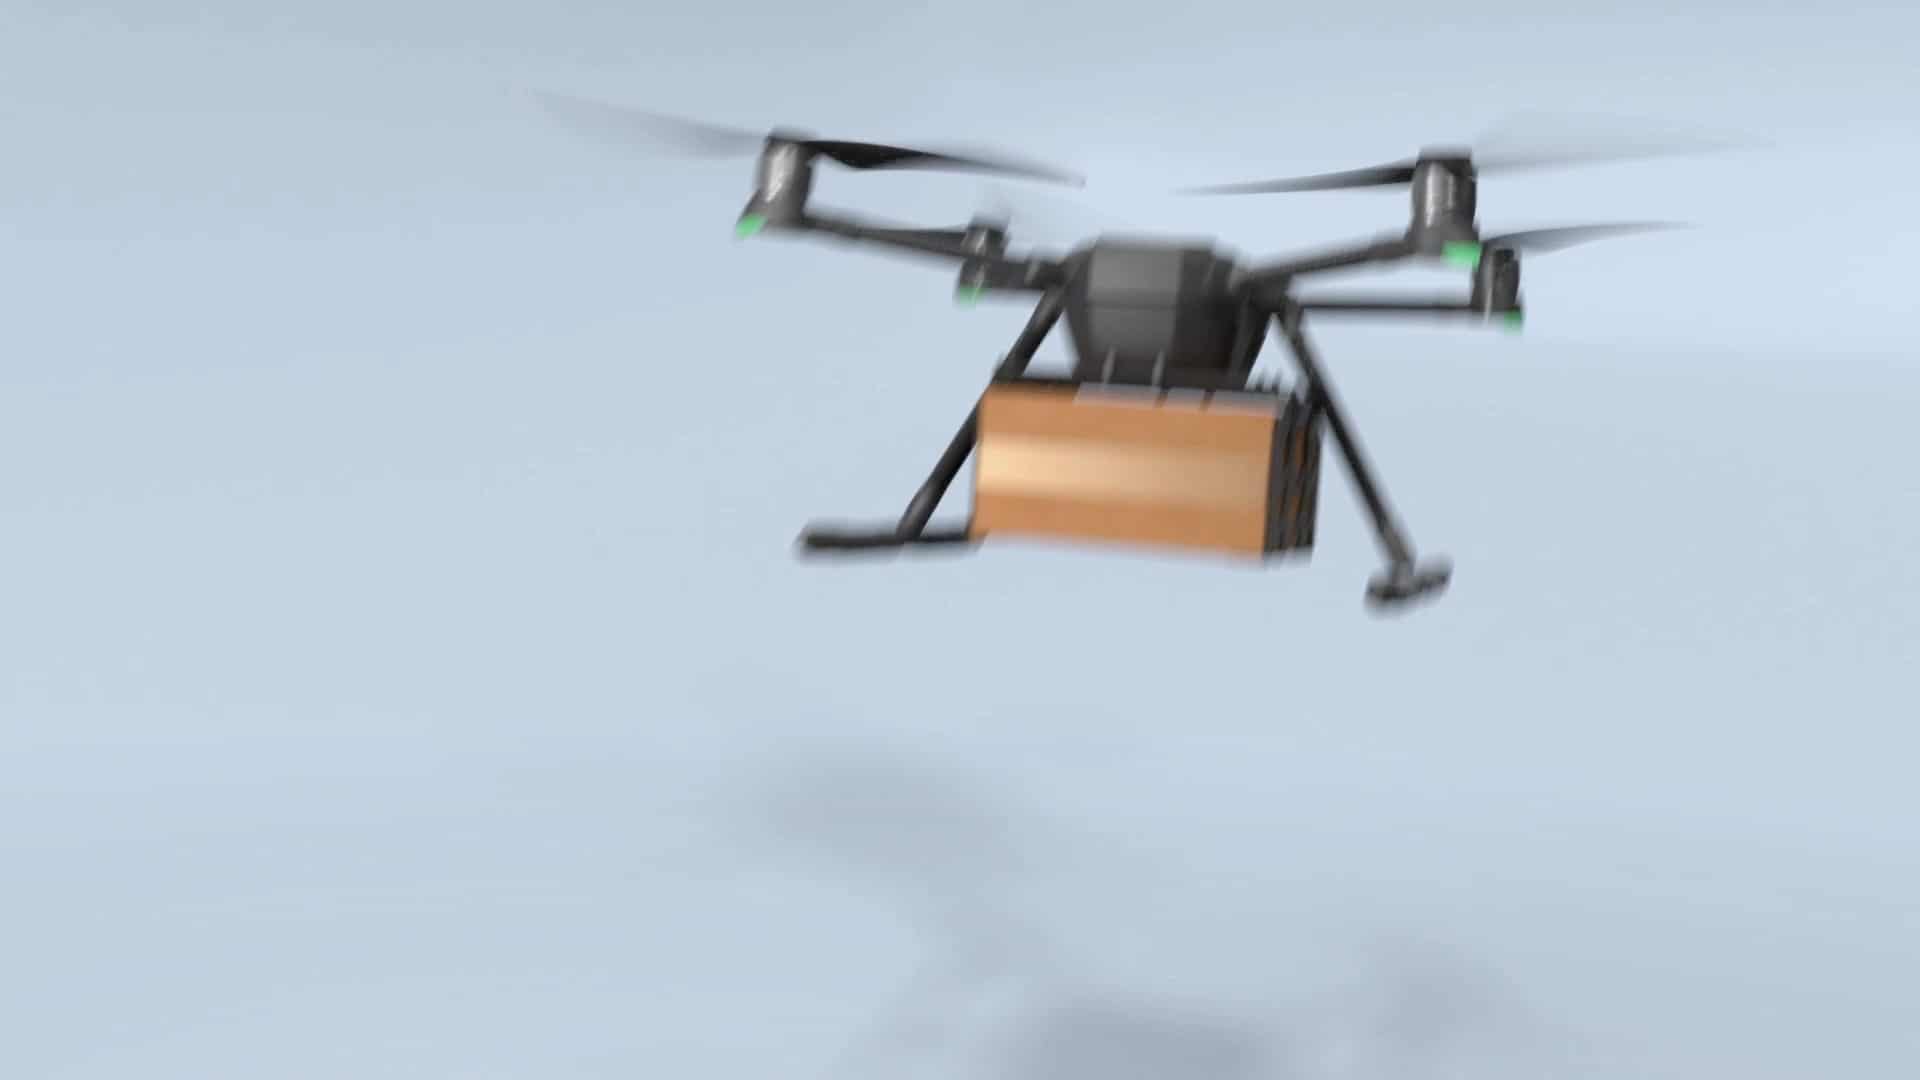 MCE123 Drone Delivery Intro Video